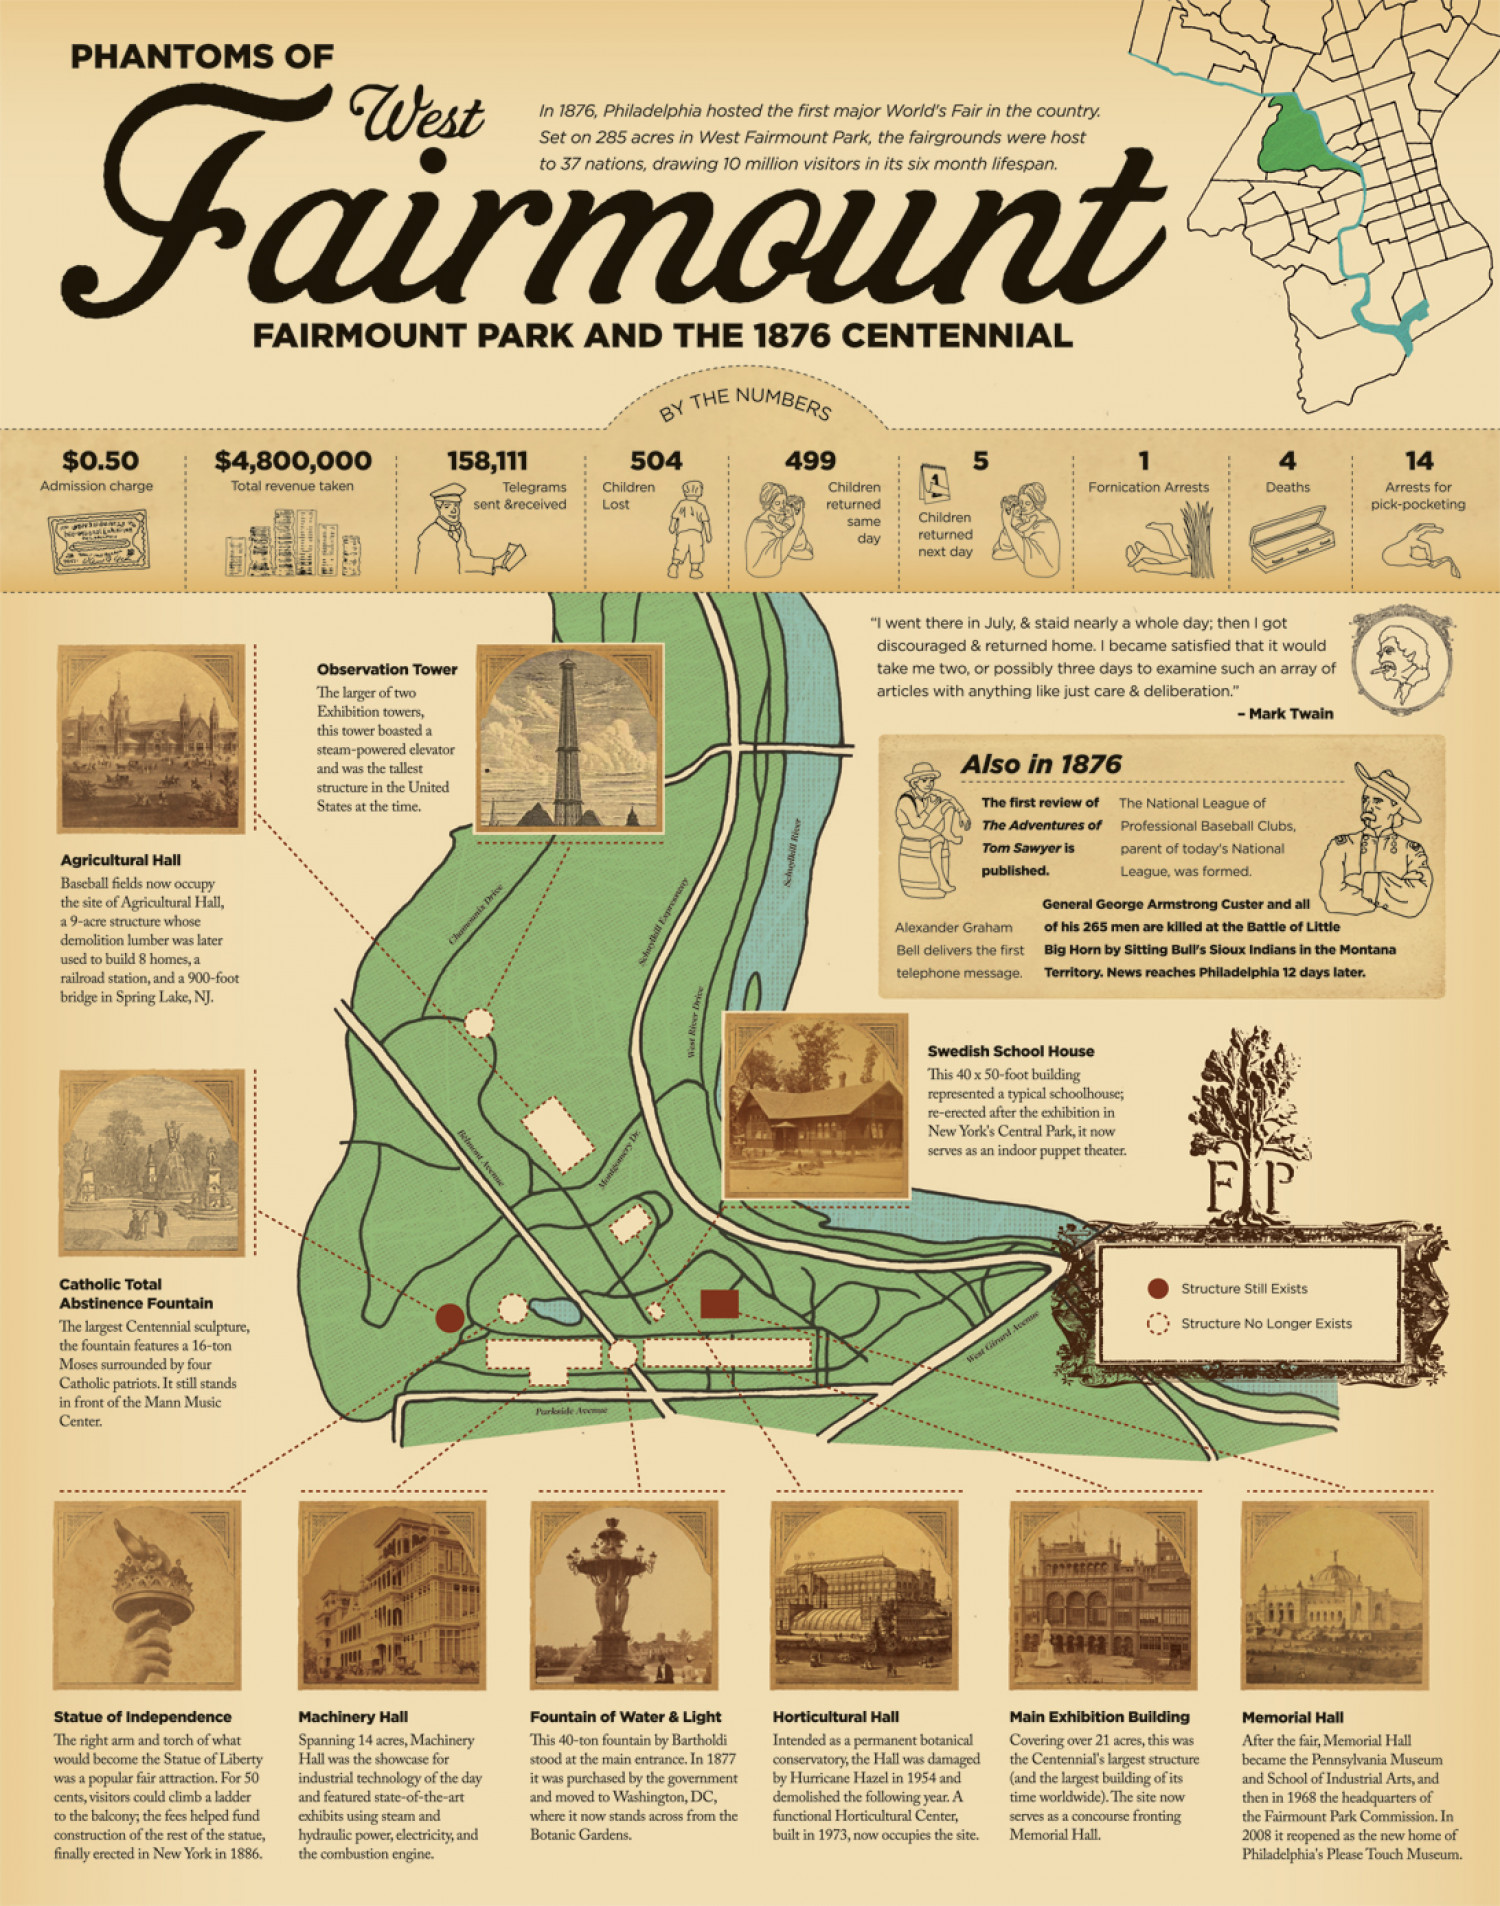 Phantoms of West Fairmount Infographic